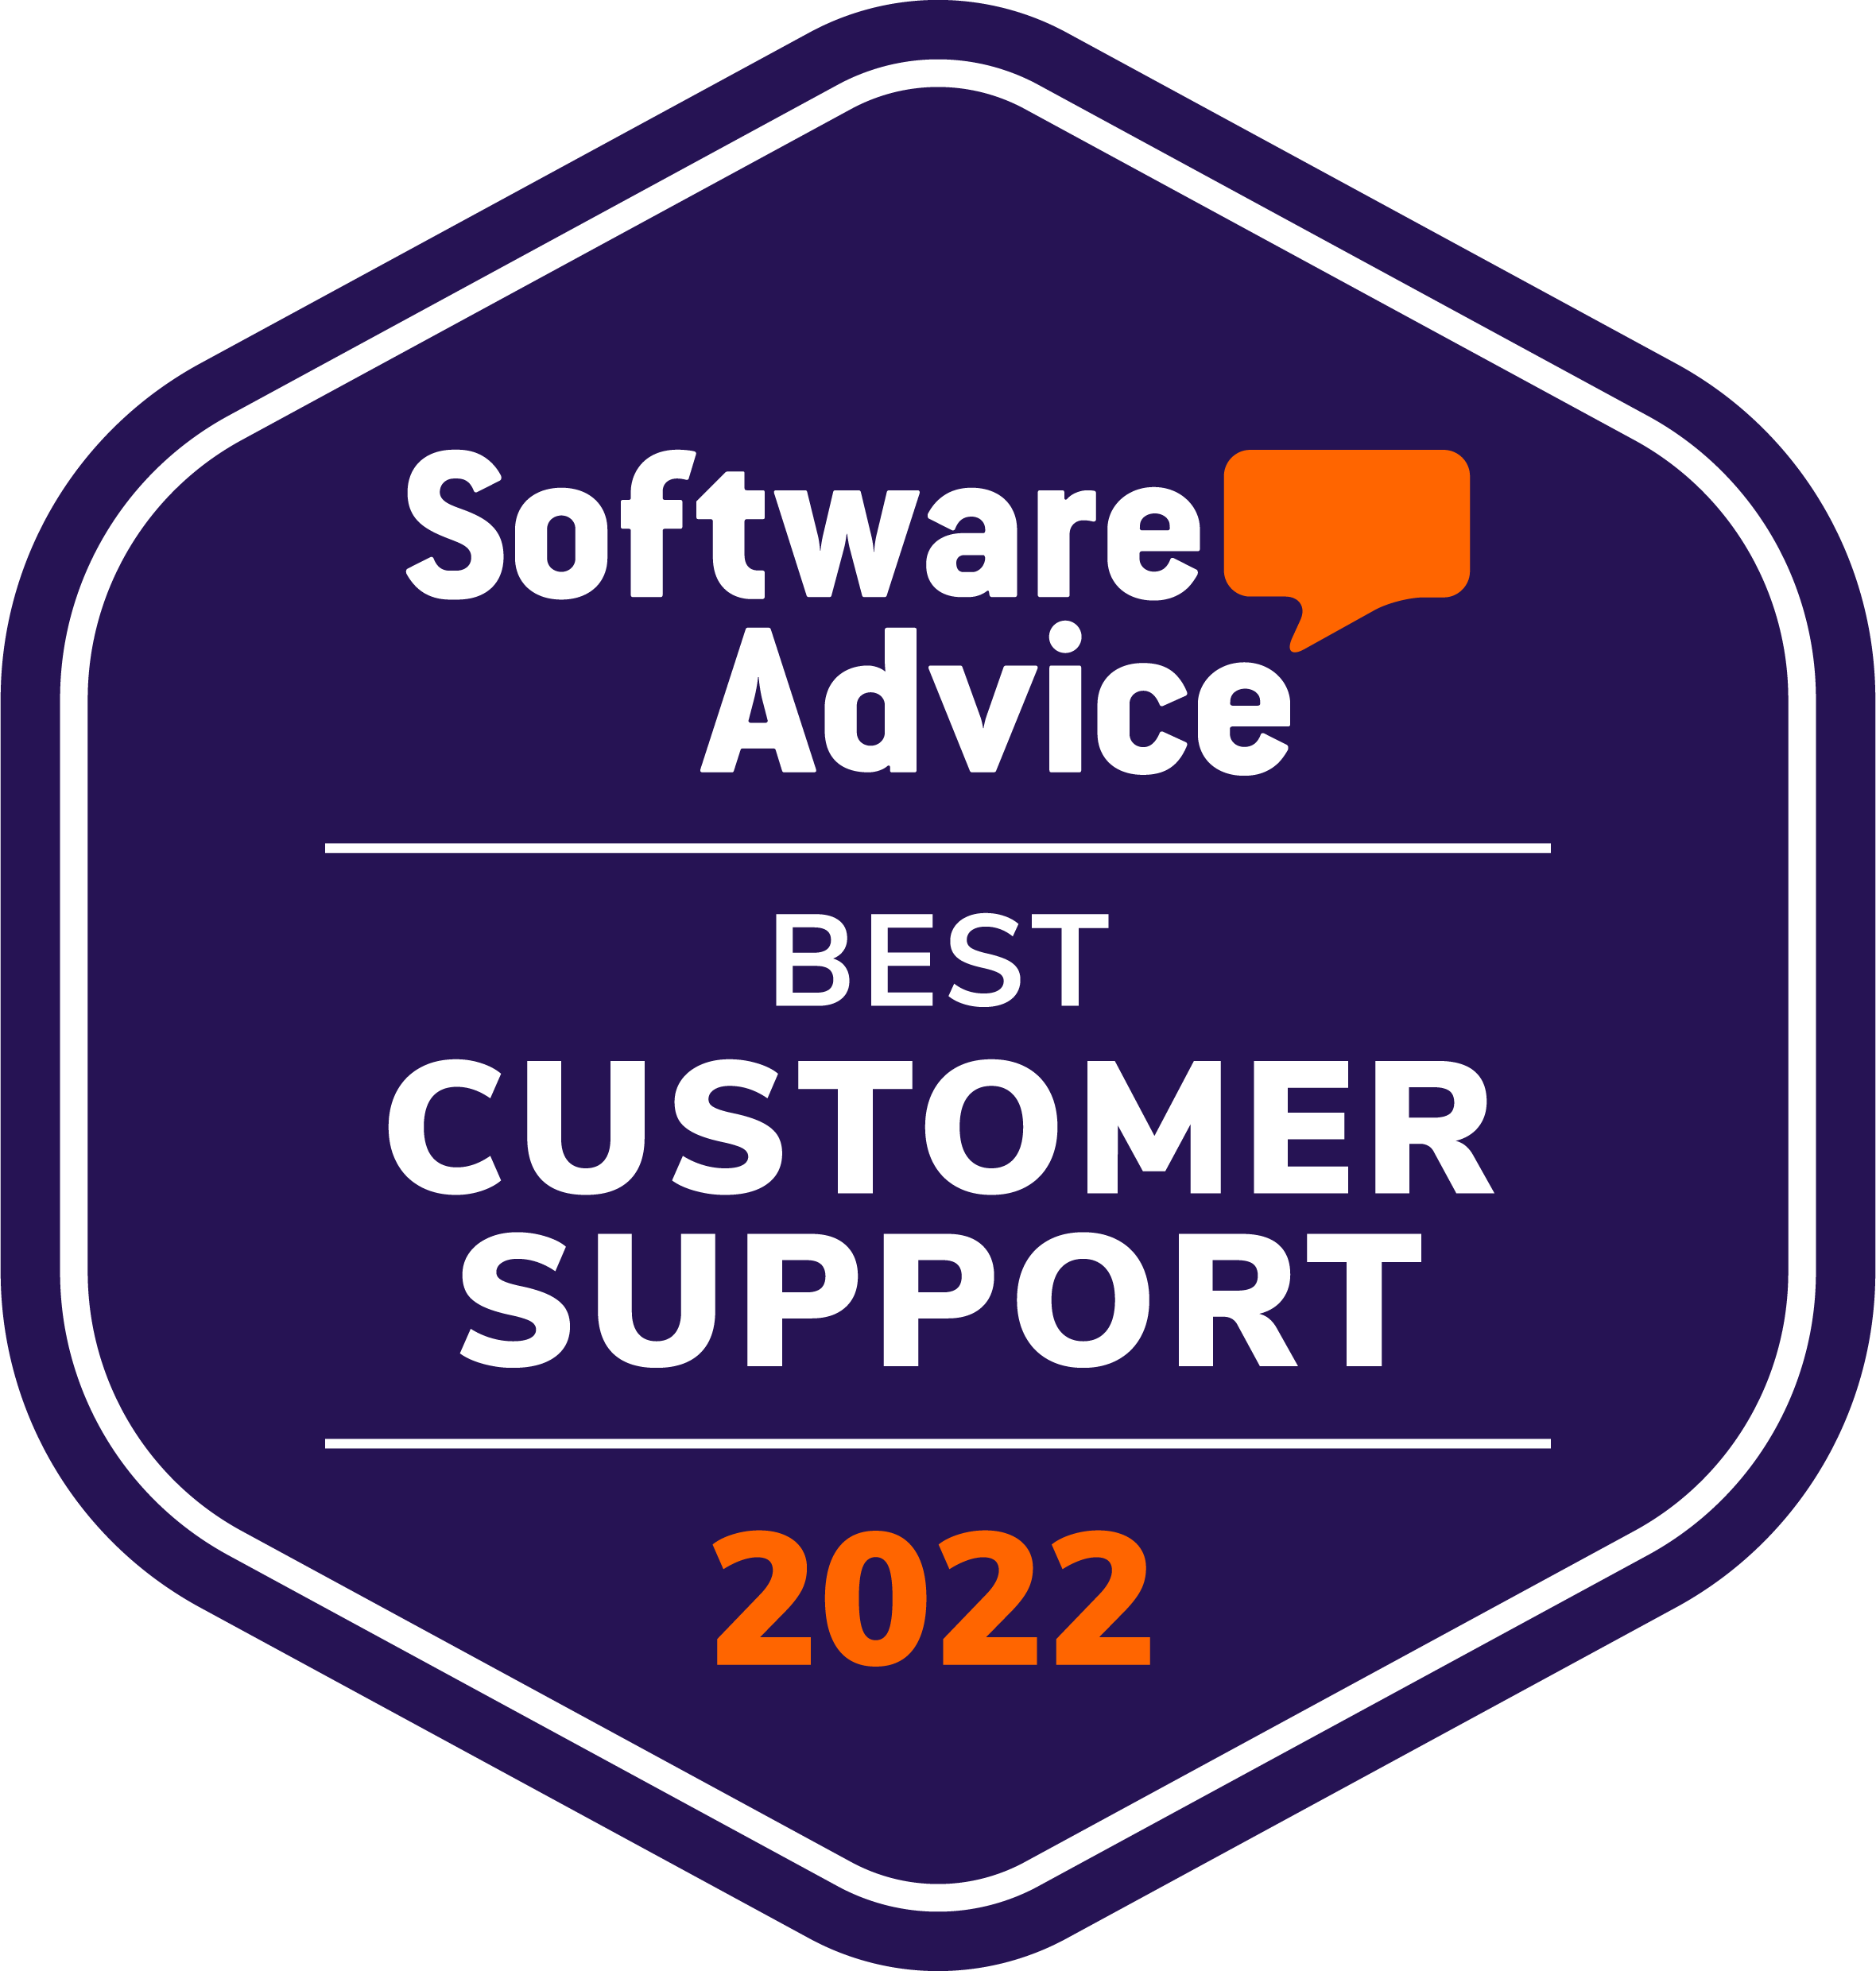 Software Advice Best Customer Support 2022-1